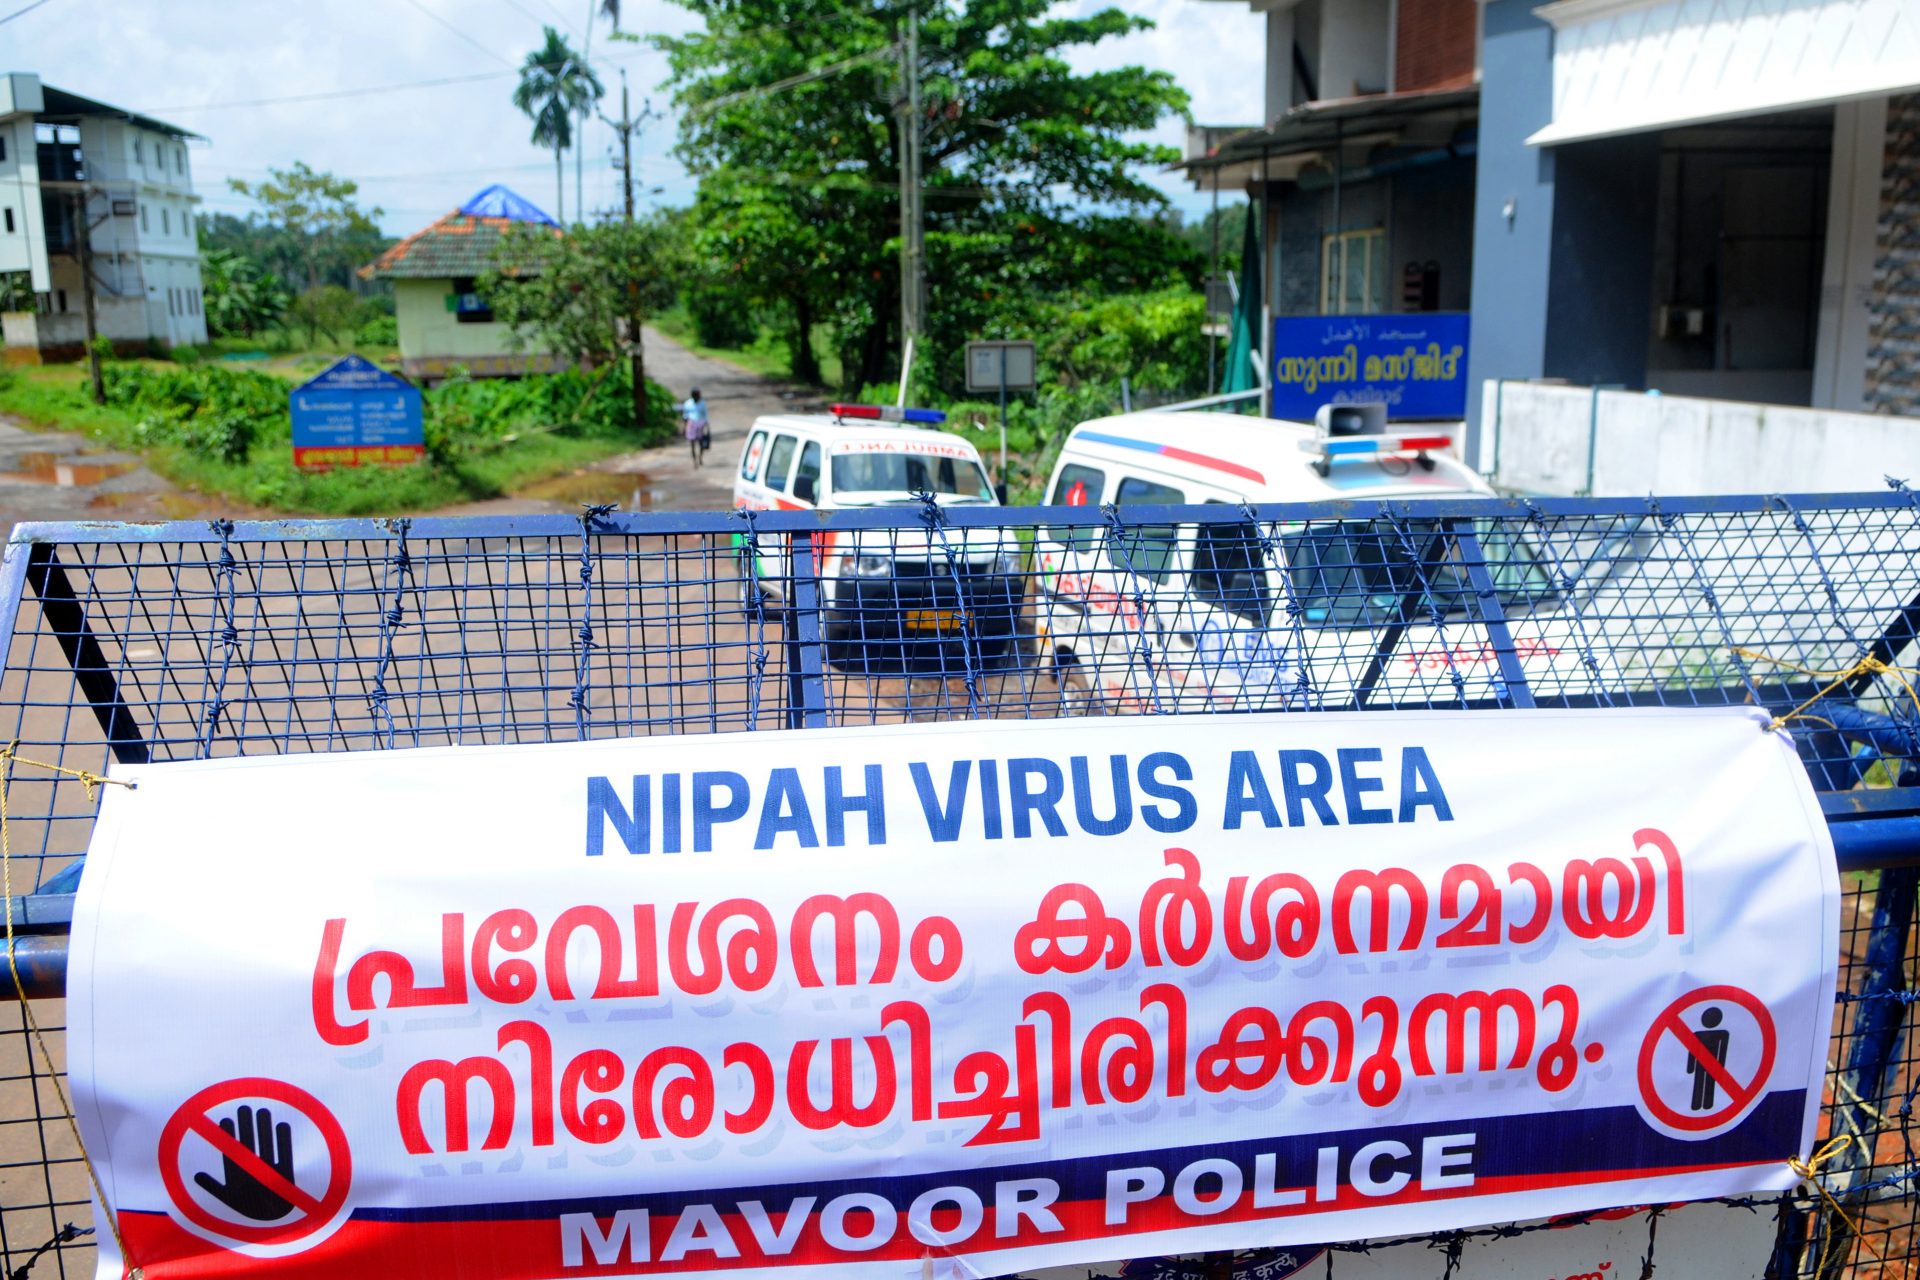 Le virus Nipah (NiV)